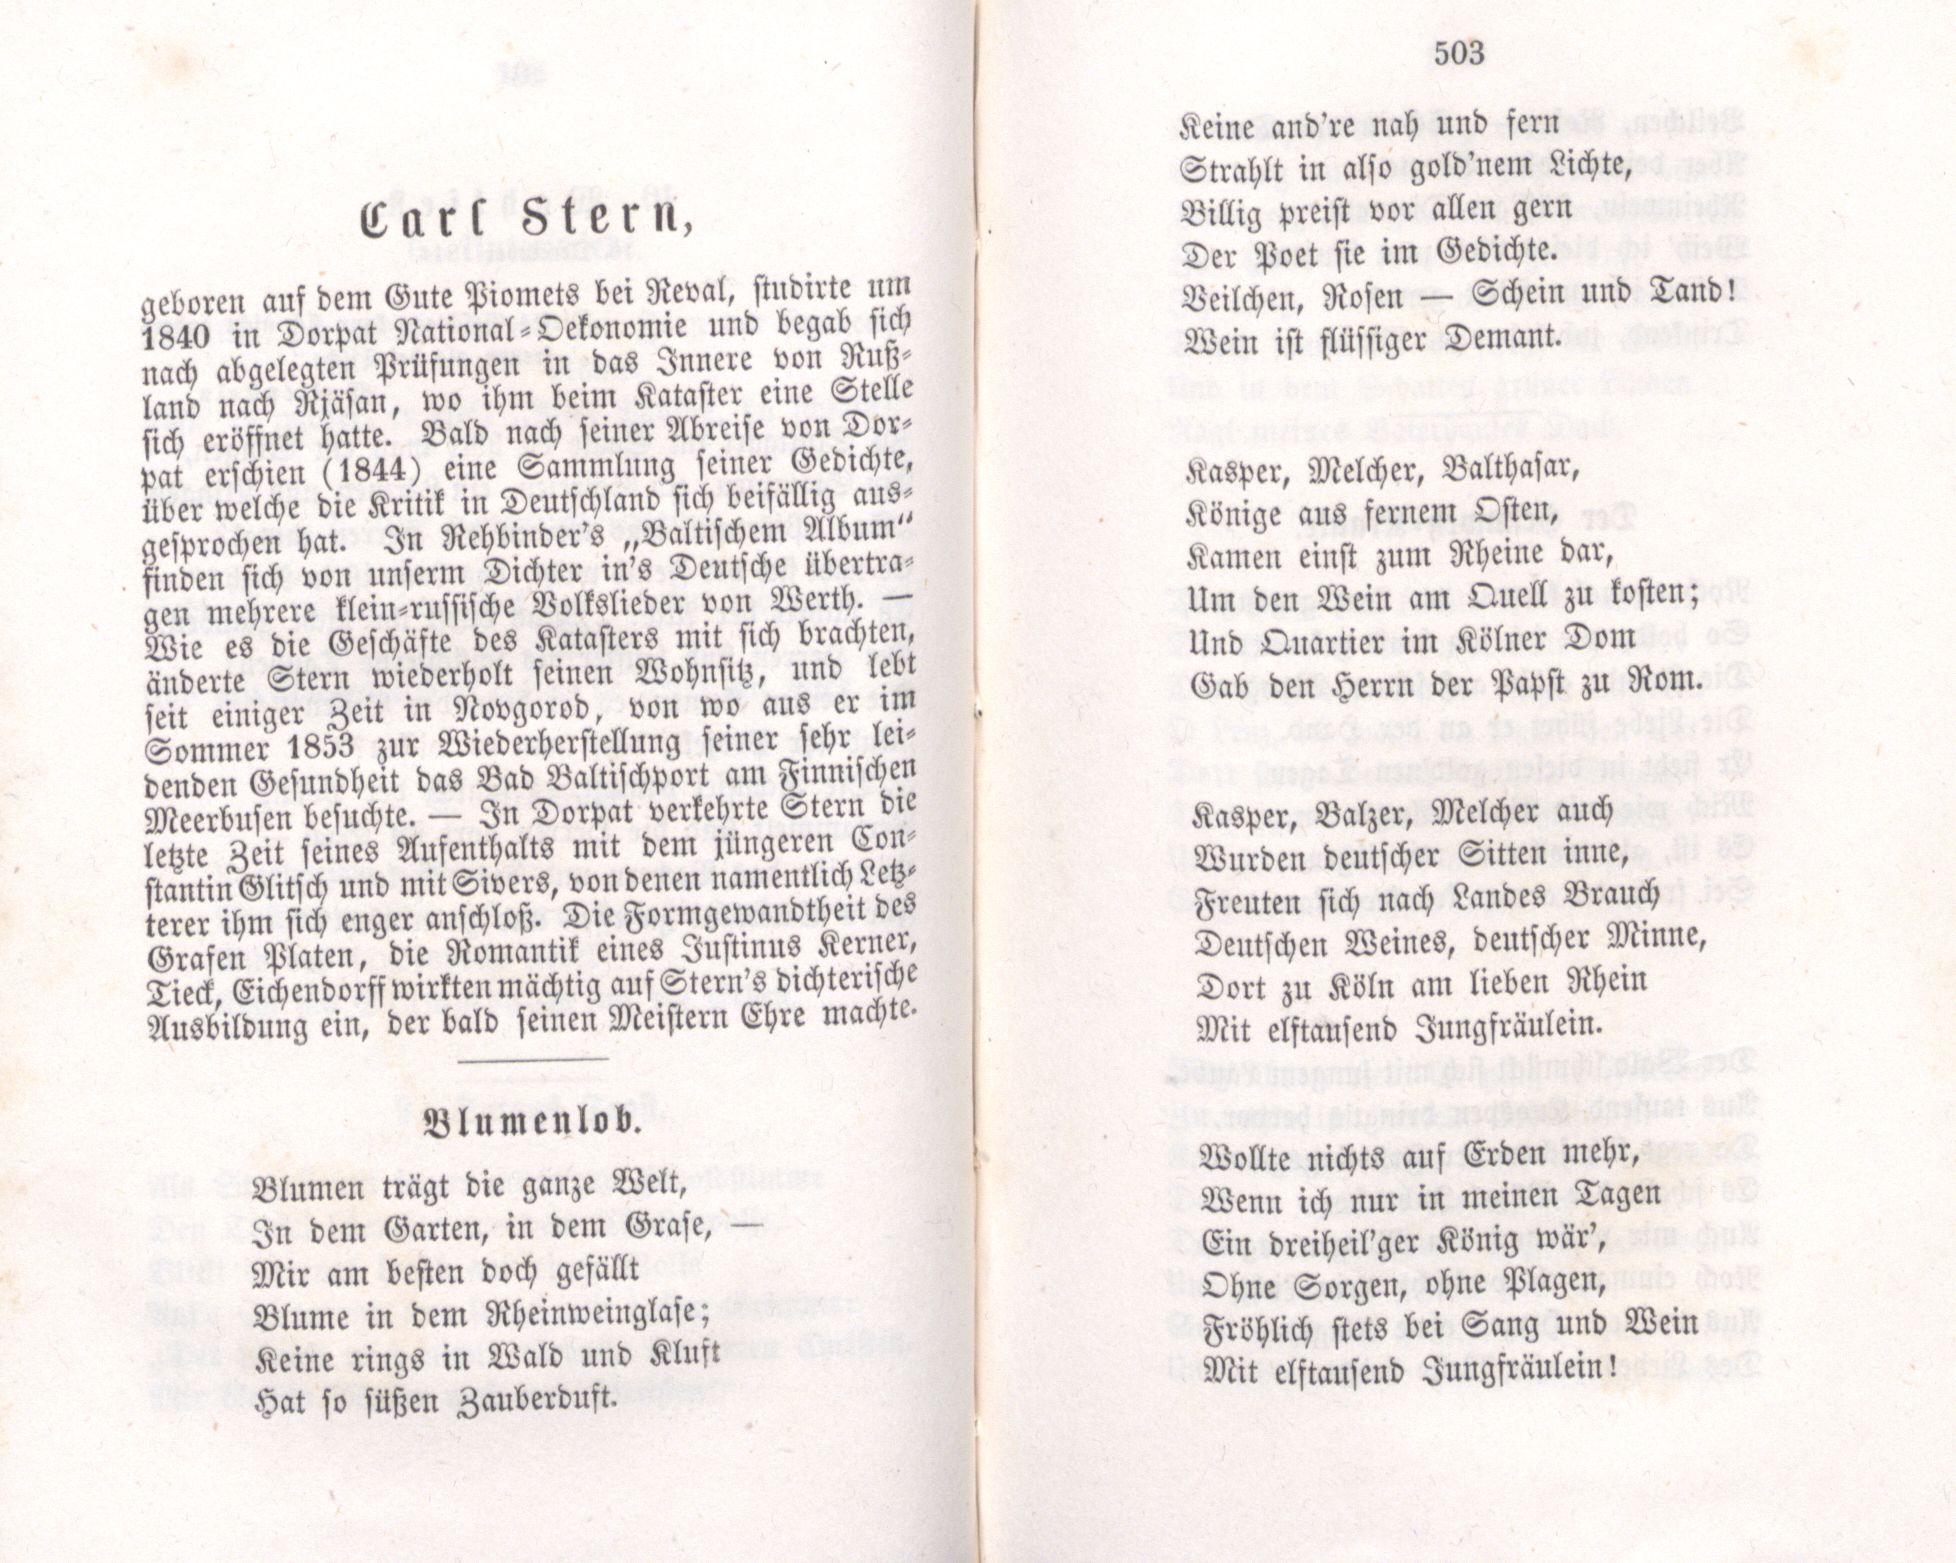 Blumenlob (1855) | 1. (502-503) Main body of text